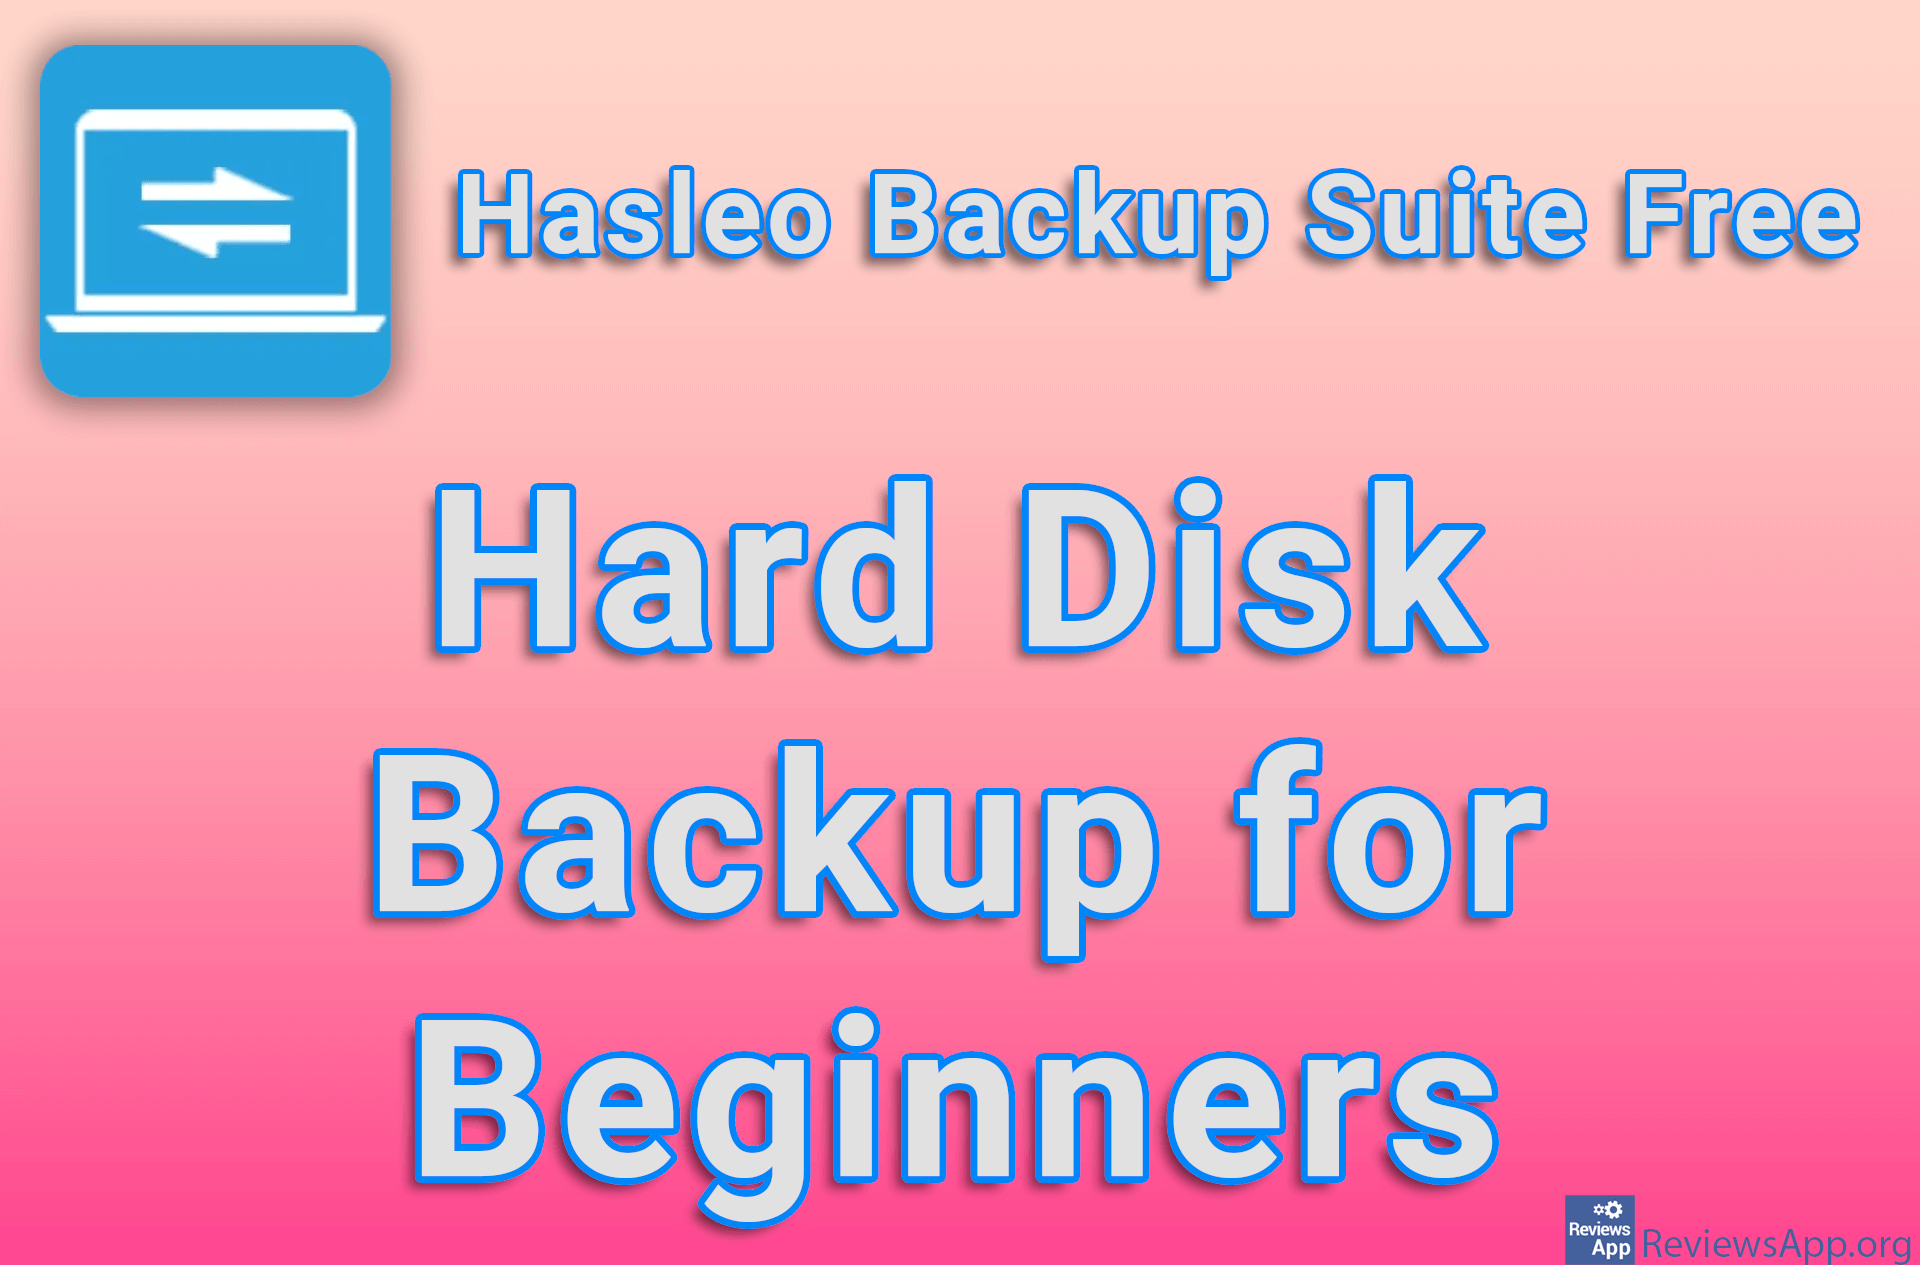 Hasleo Backup Suite Free – Hard Disk Backup for Beginners